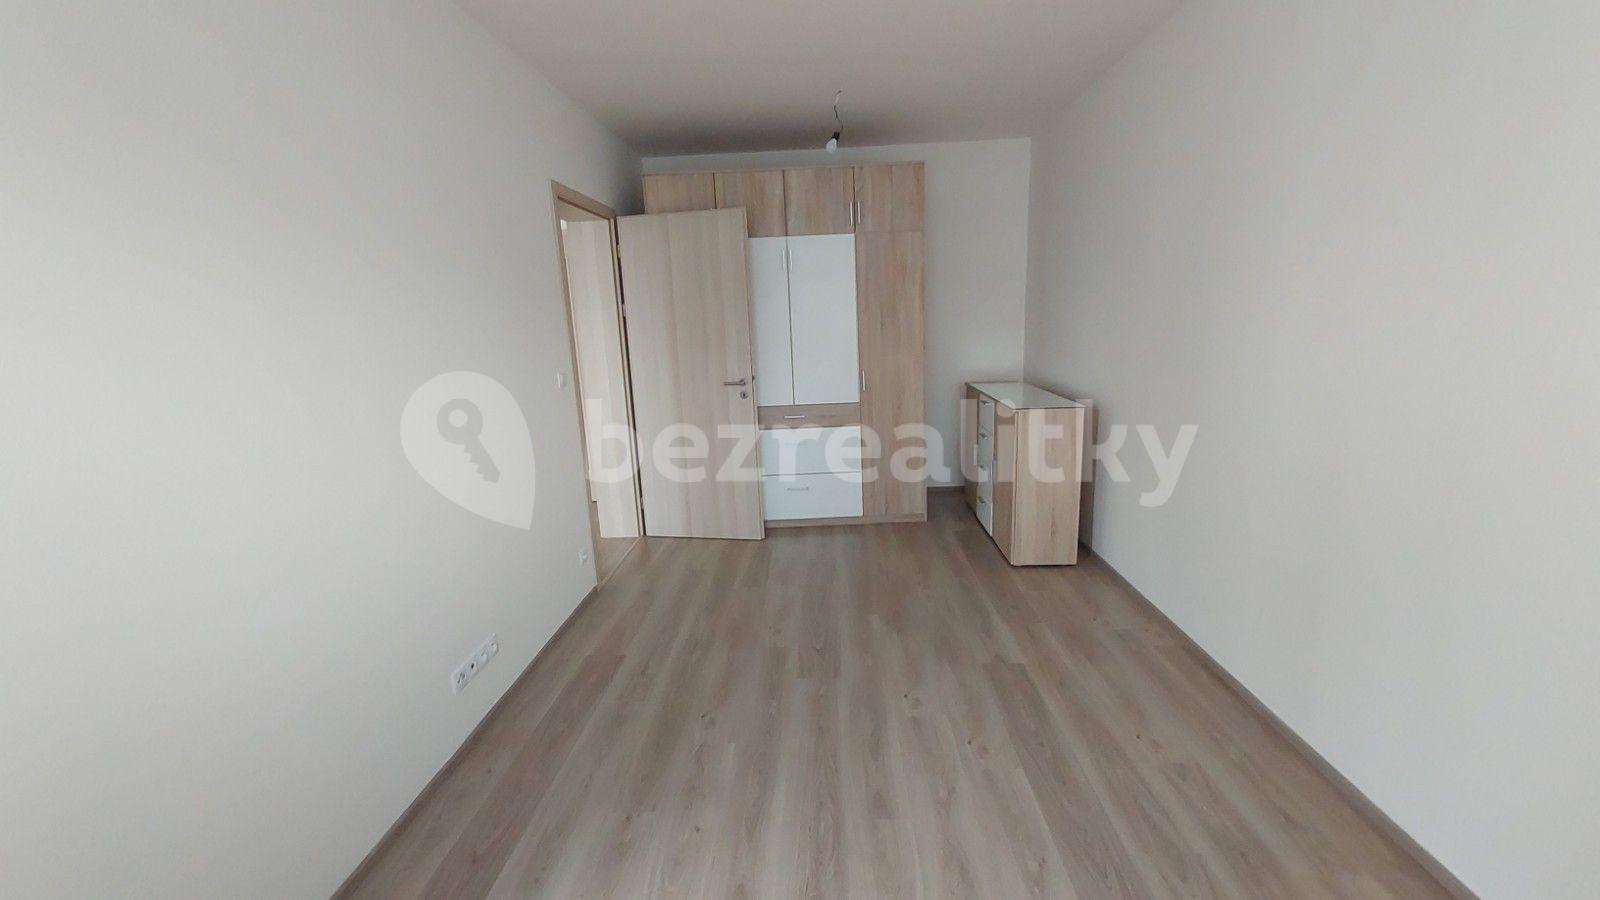 1 bedroom with open-plan kitchen flat to rent, 54 m², Kramperova, Prague, Prague